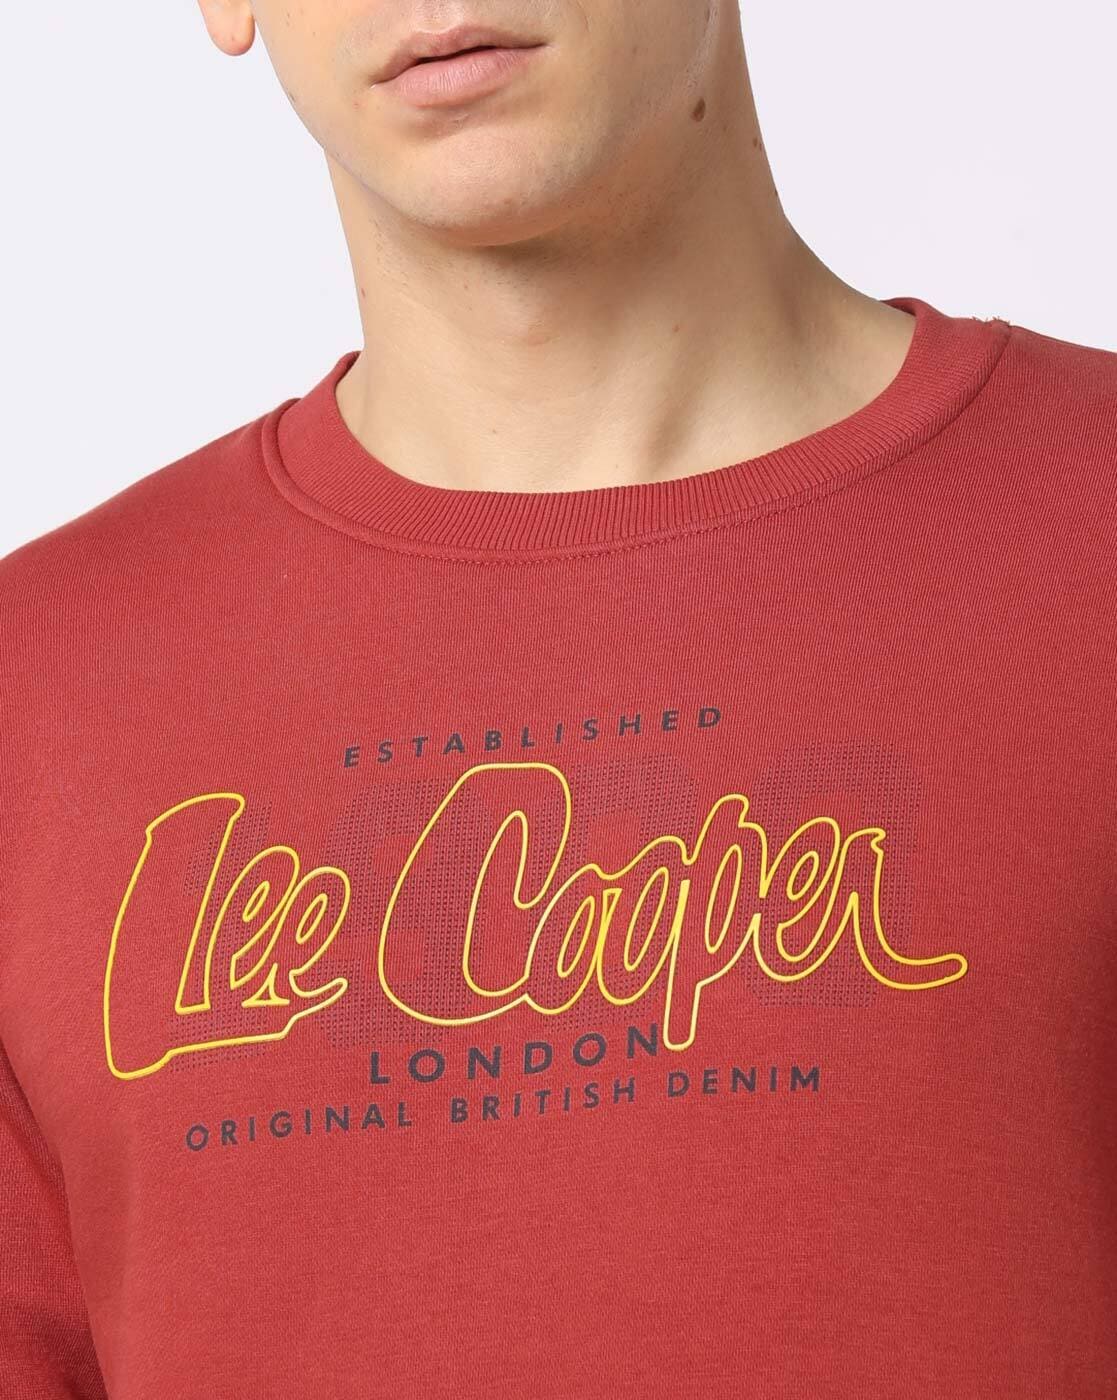 Mens Branded Lee Cooper Short Sleeves Top Large Logo Print T Shirt Size  S-XXXXL | eBay